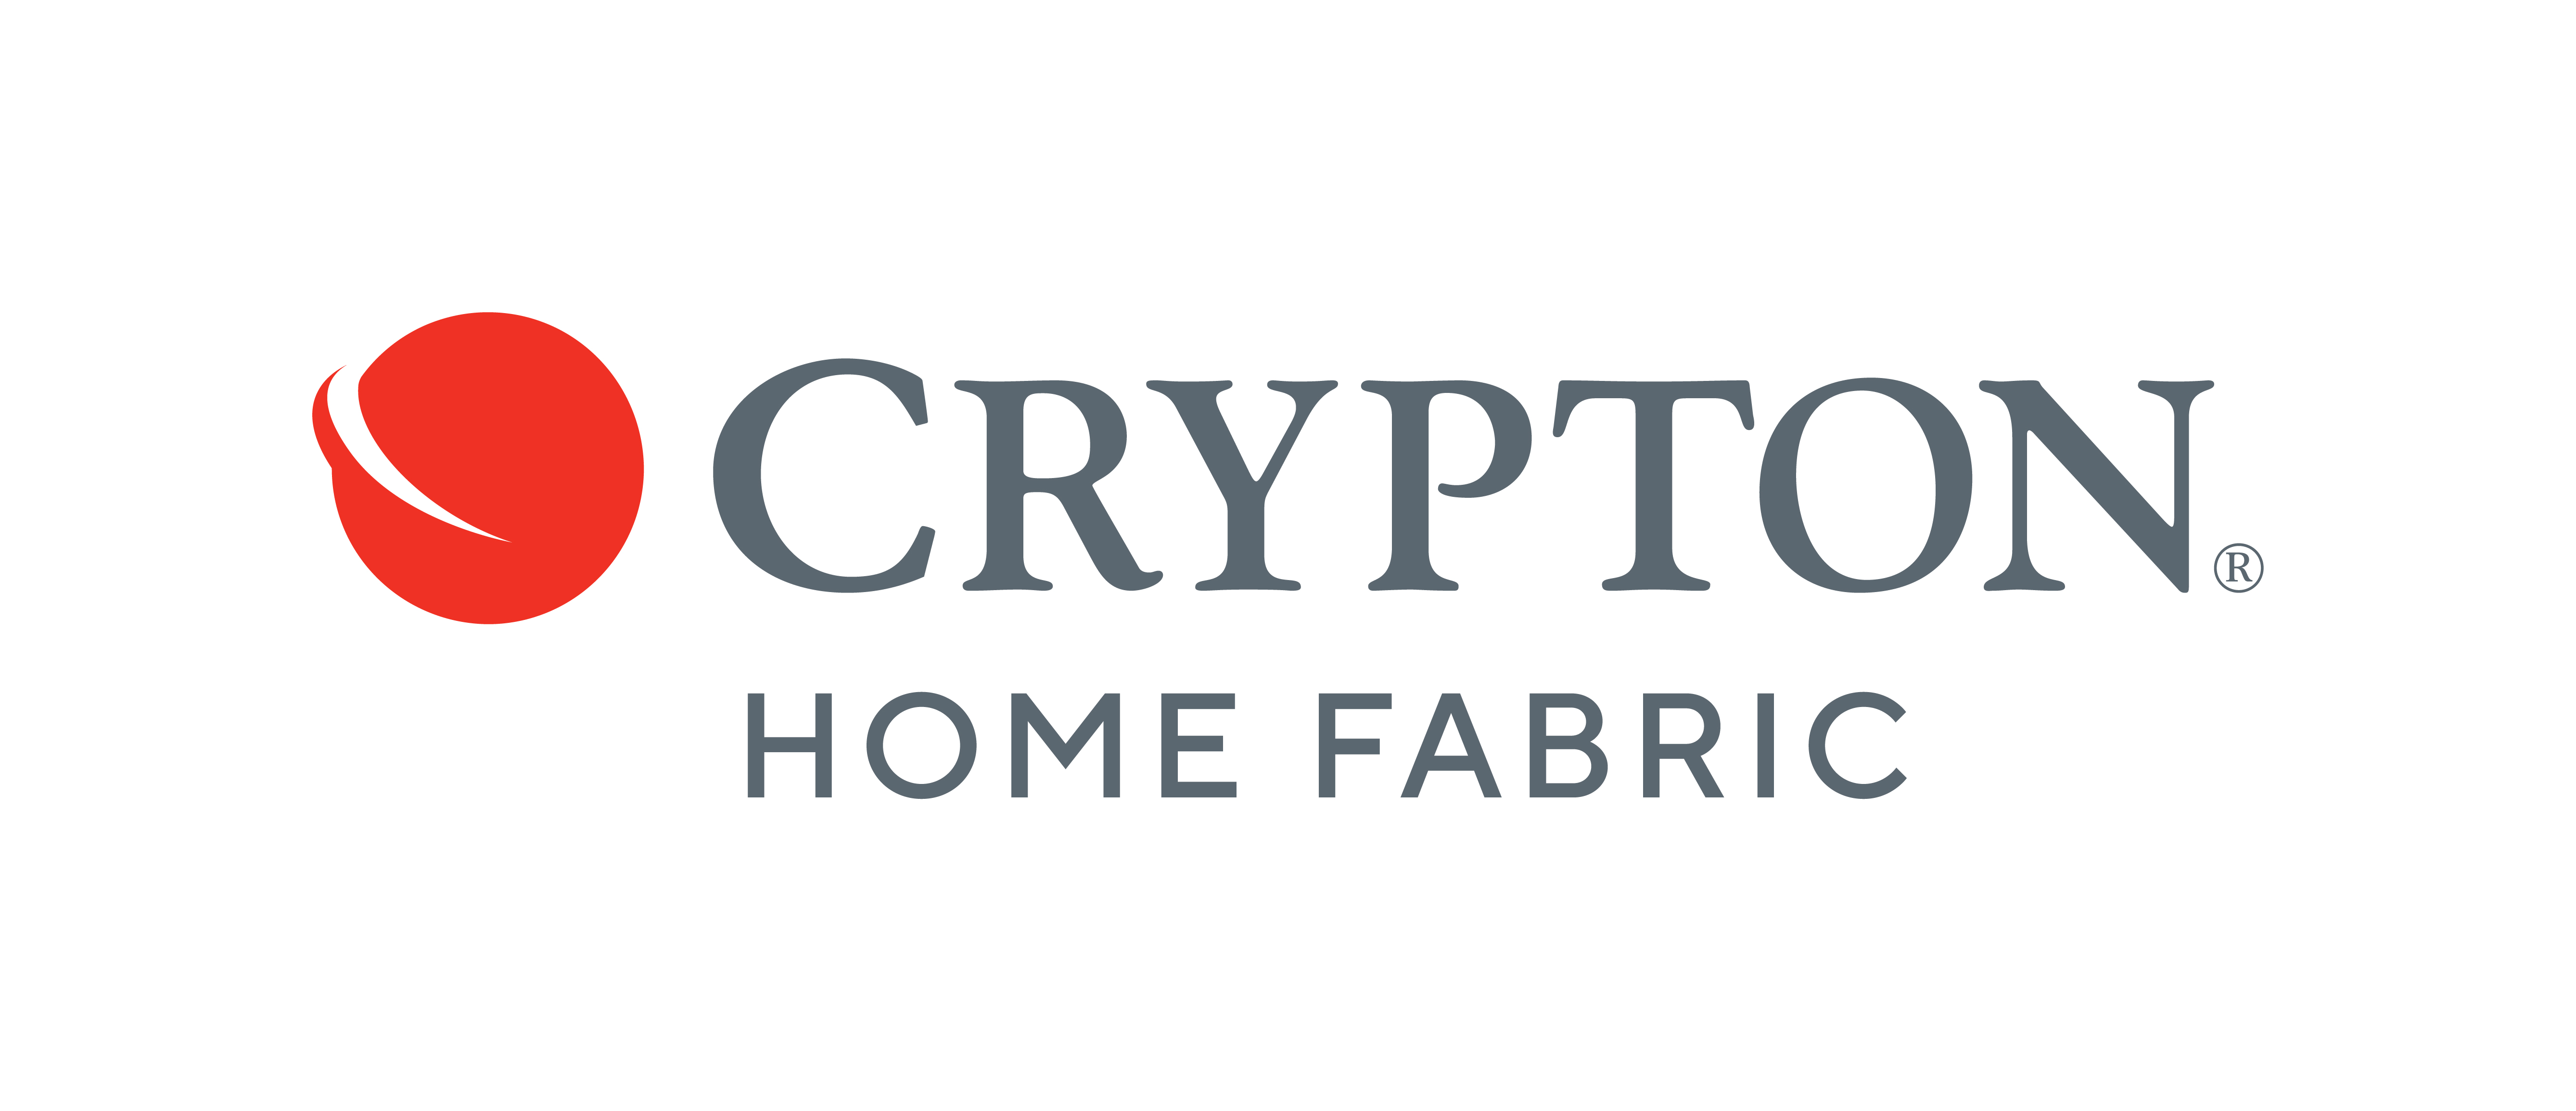 Crypton Home Fabric logo